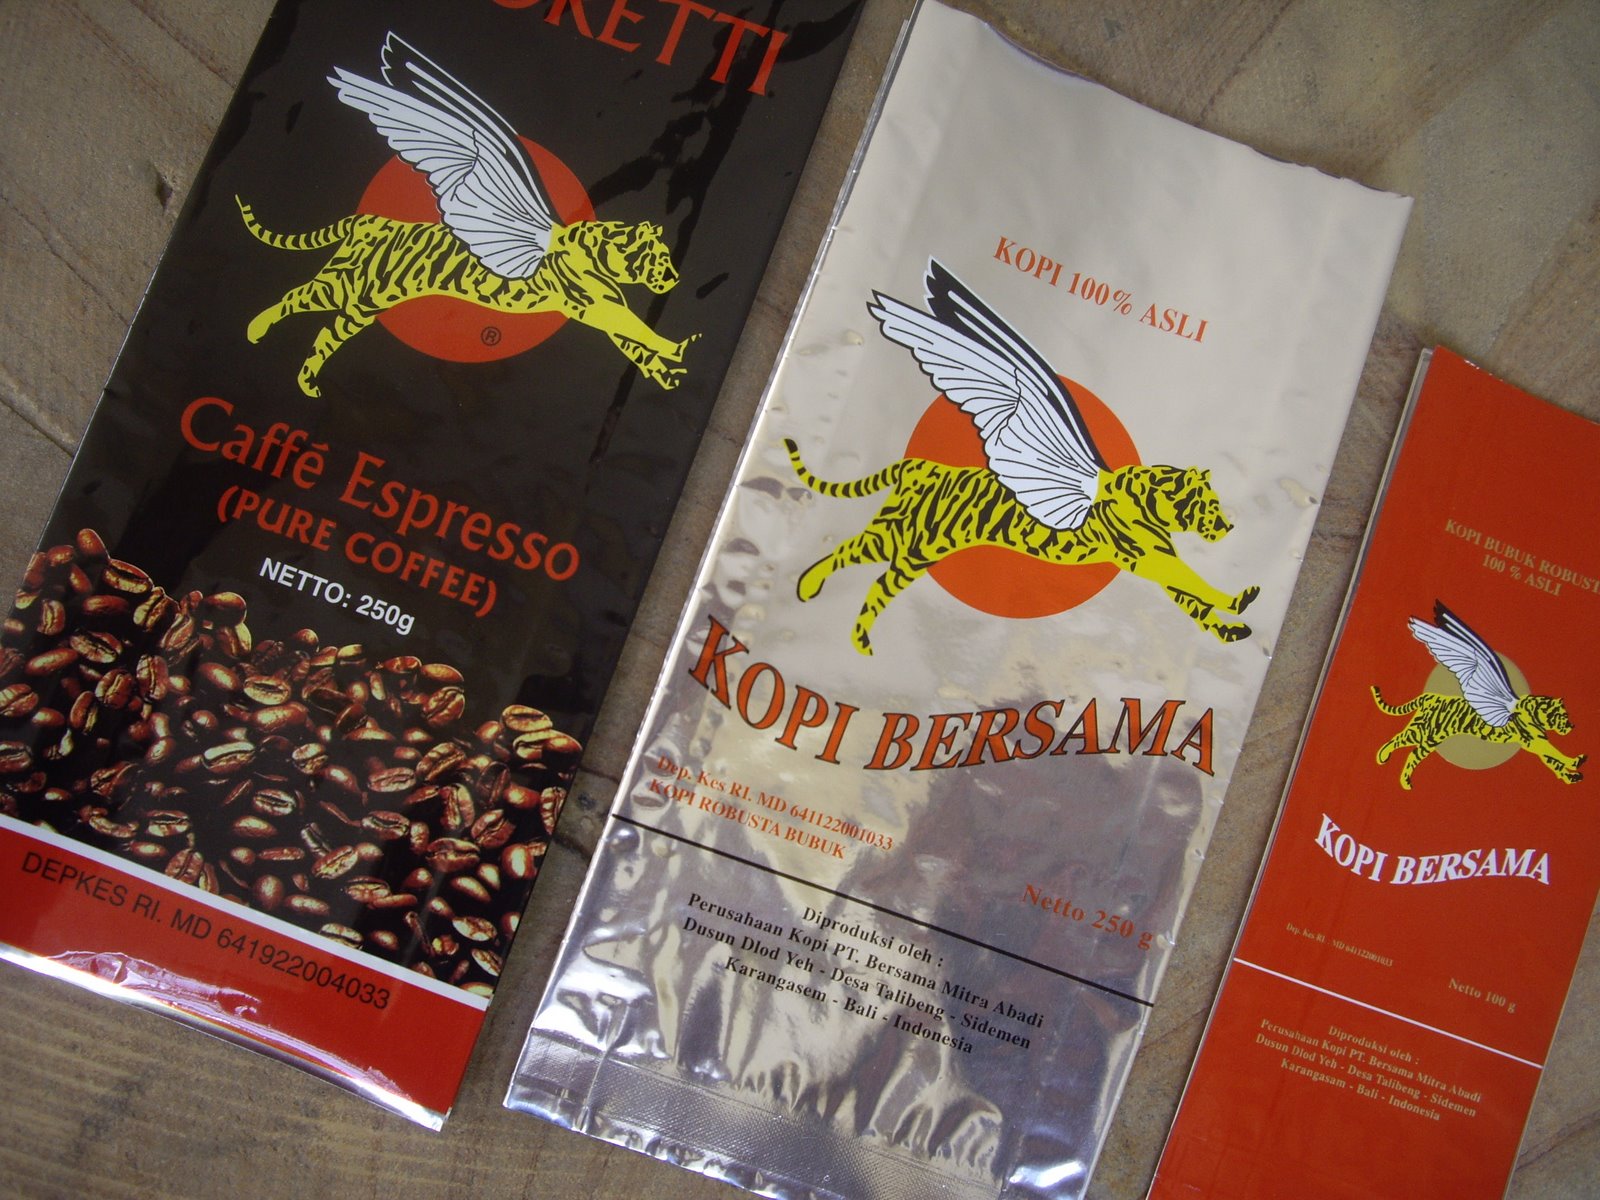 CAFFE ESPRESSO, KOPI BERSAMA, KOPI BALI BERSAMA.  BALI COFFEES  PRODUCED UNDER ITALIAN SUPERVISION